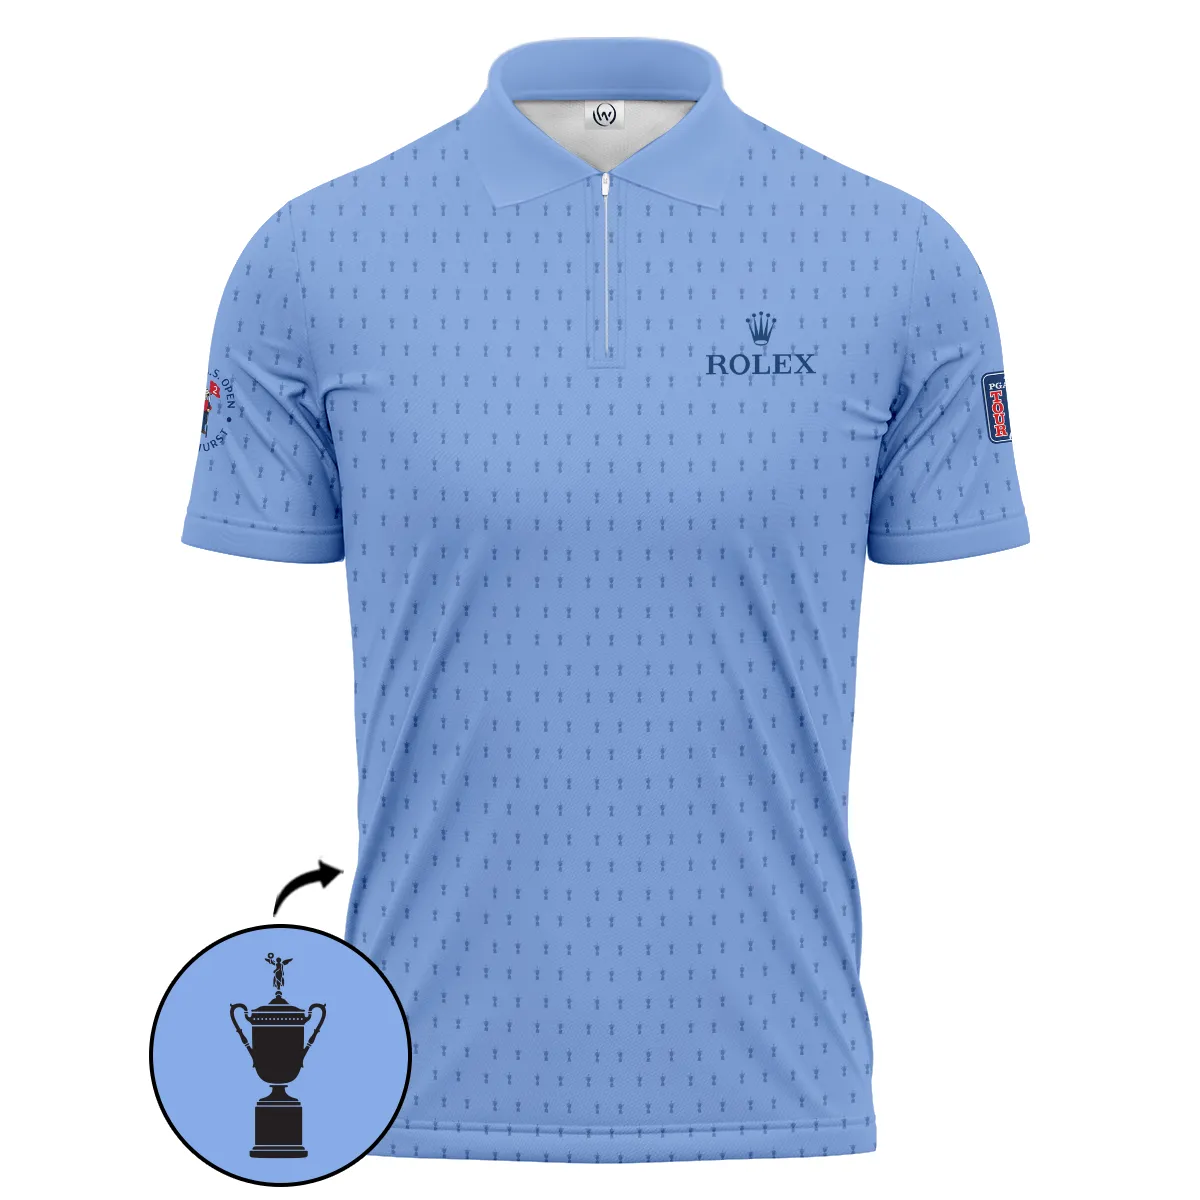 Golf Pattern Cup Blue 124th U.S. Open Pinehurst Pinehurst Rolex Zipper Polo Shirt Style Classic